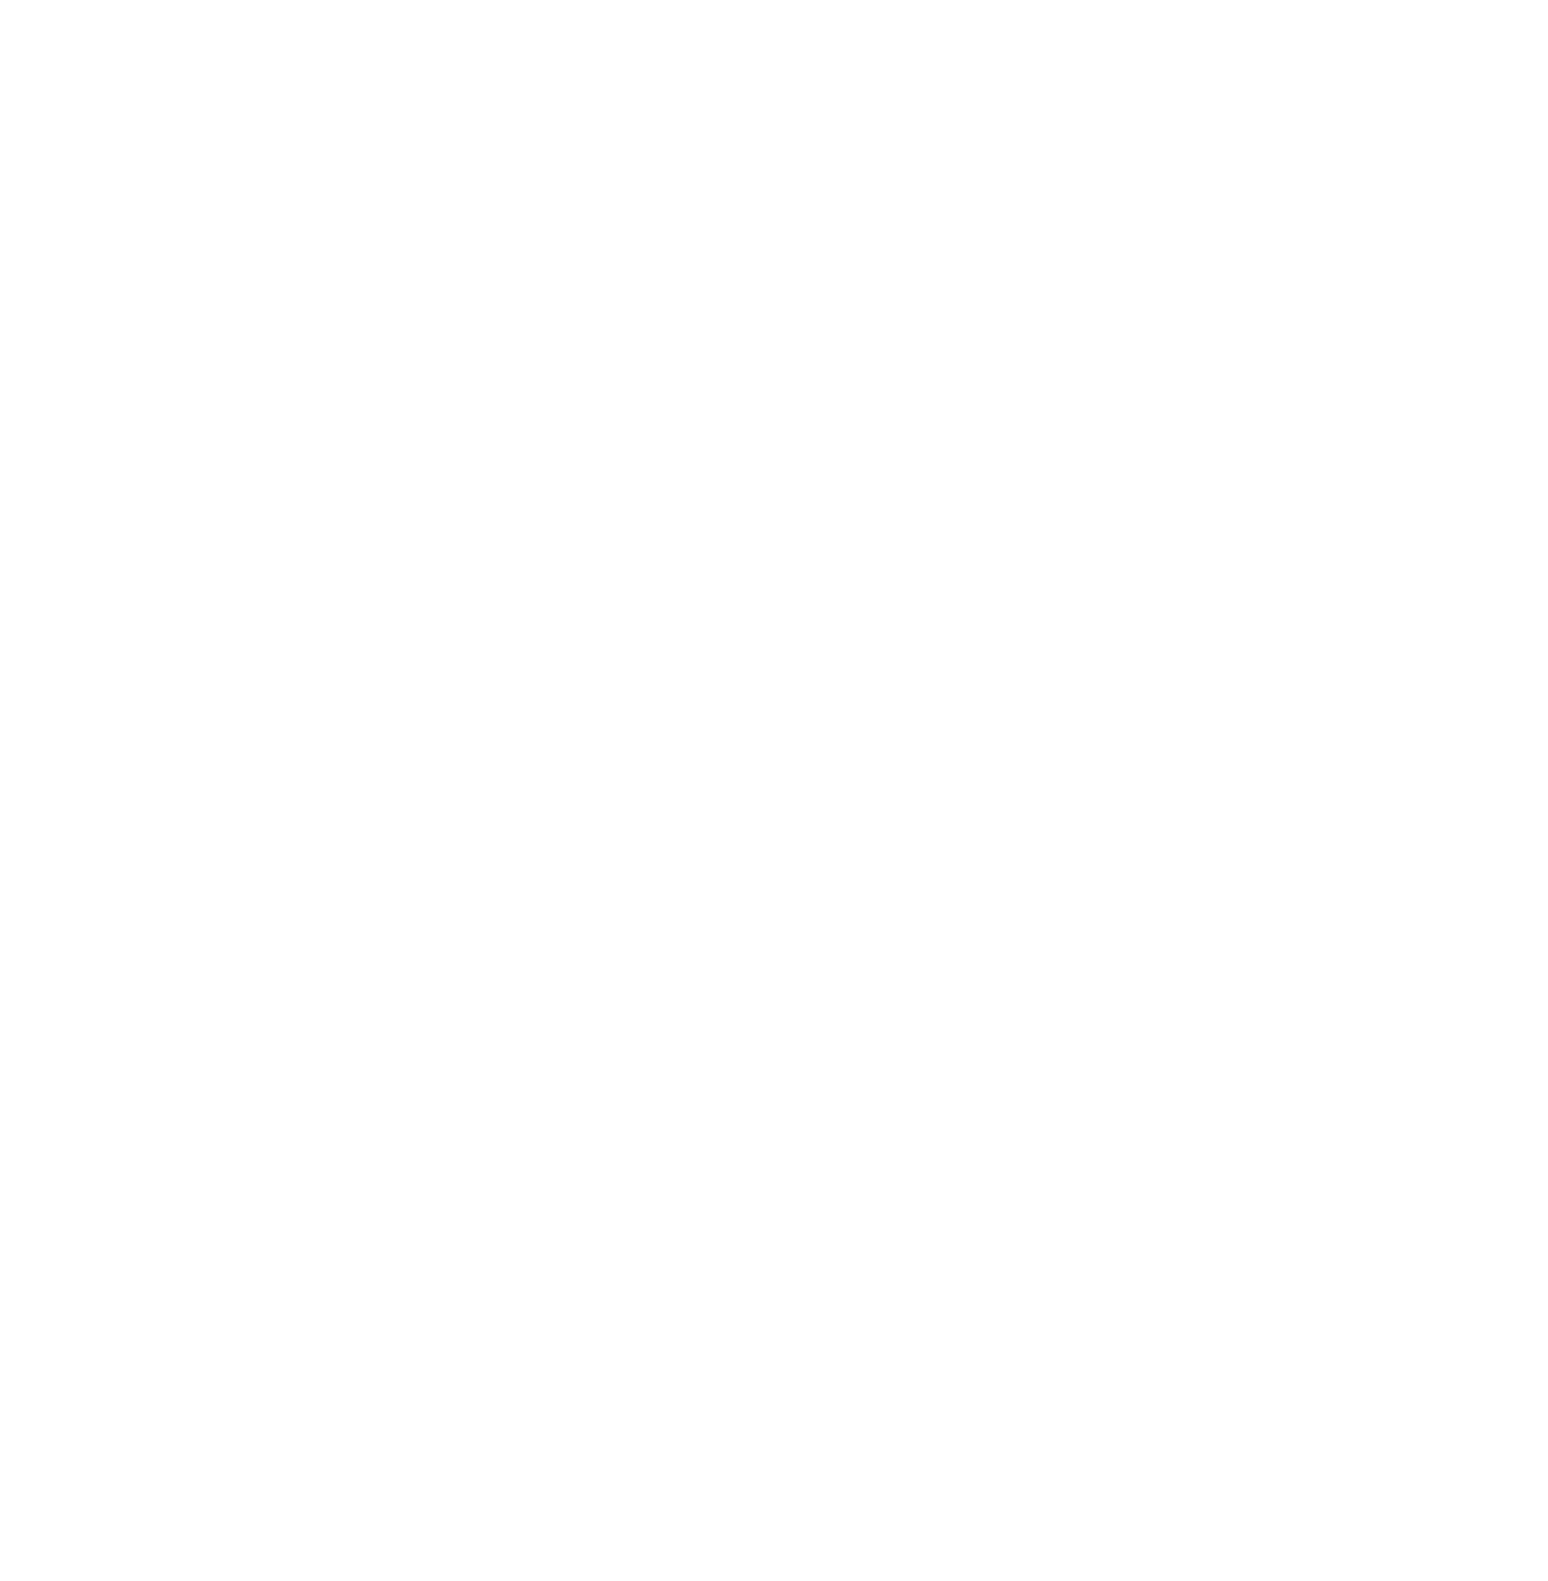 Sonoco logo large for dark backgrounds (transparent PNG)